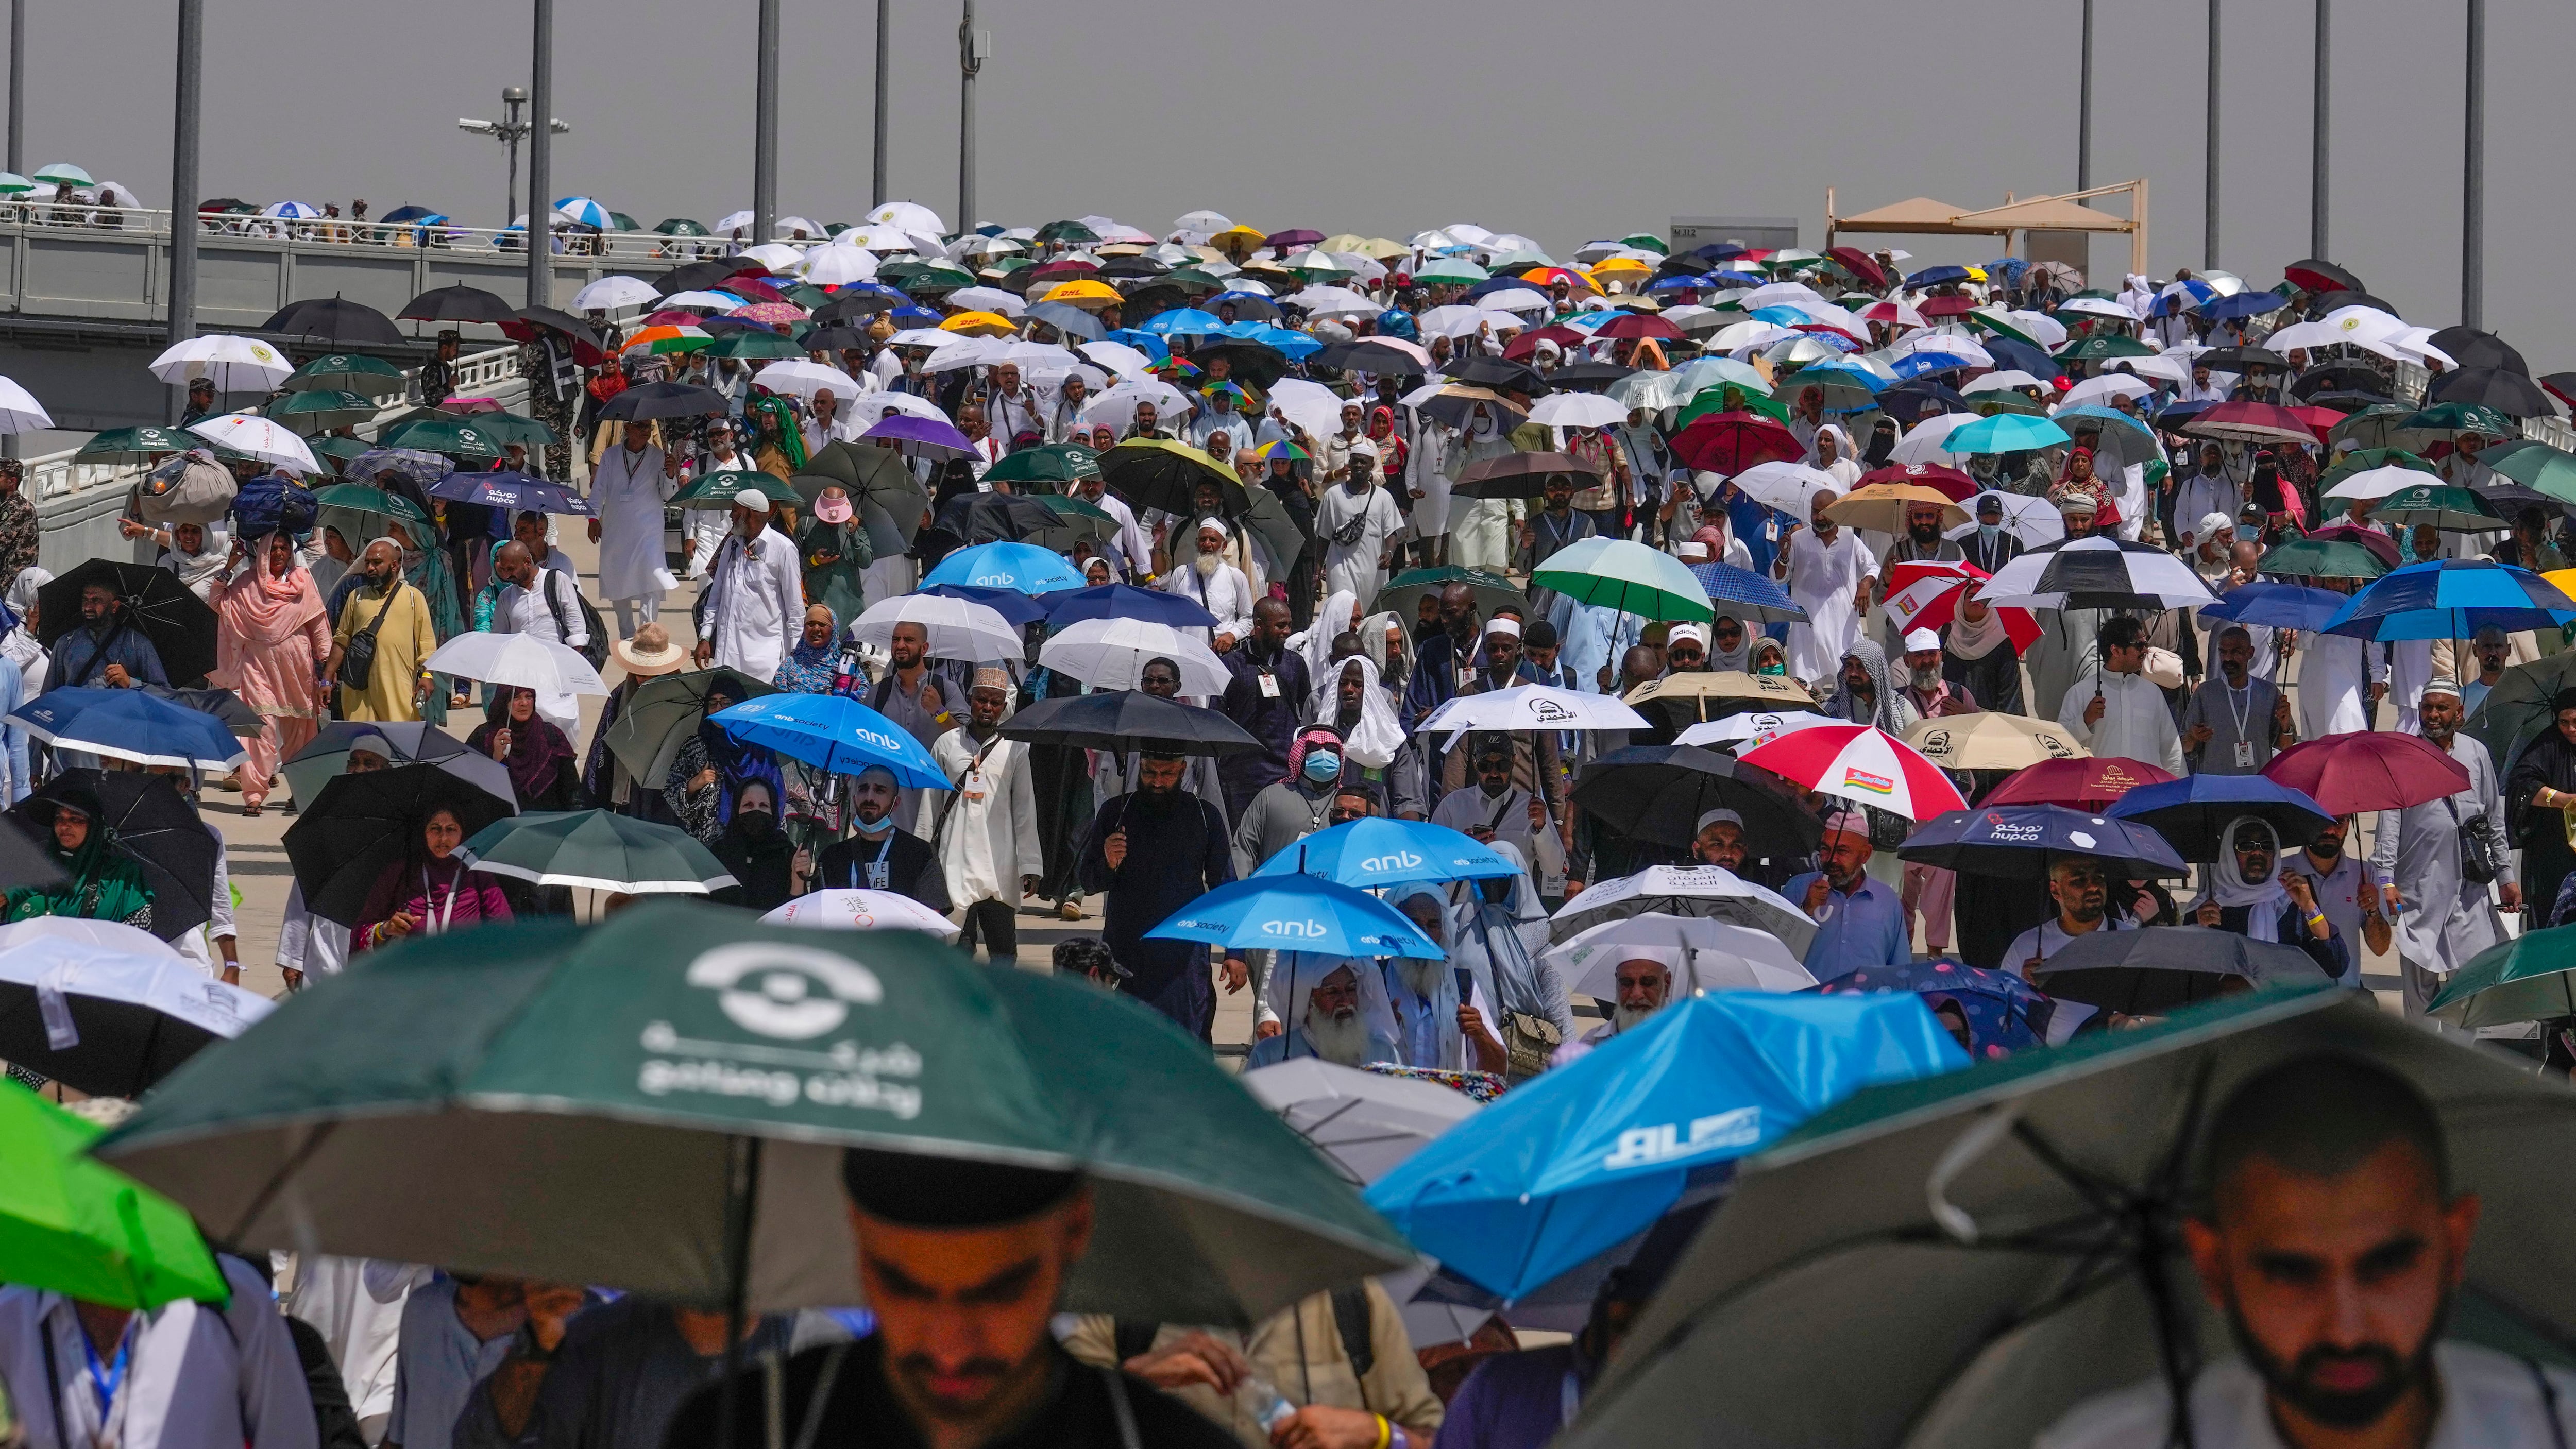 This year’s Hajj pilgrimage in Saudi Arabia saw temperatures consistently top 40C (Rafiq Maqbool/AP)